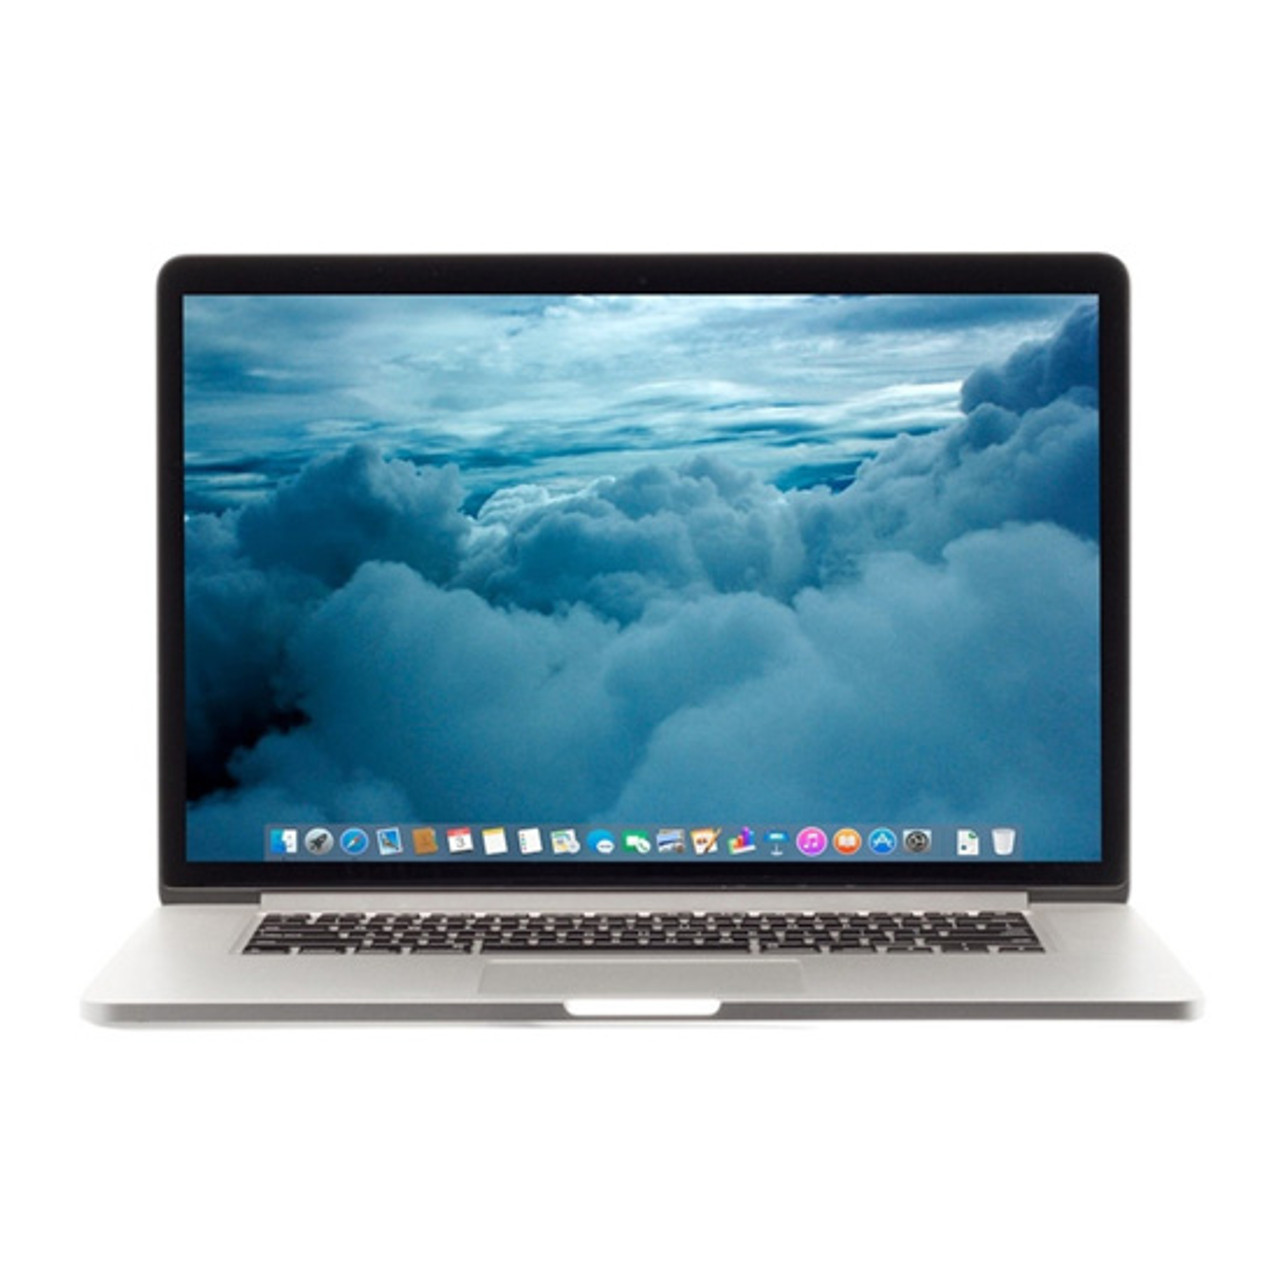 Used Apple MacBook Pro 15-inch 2.5GHz Quad-core i7 (Retina, Mid